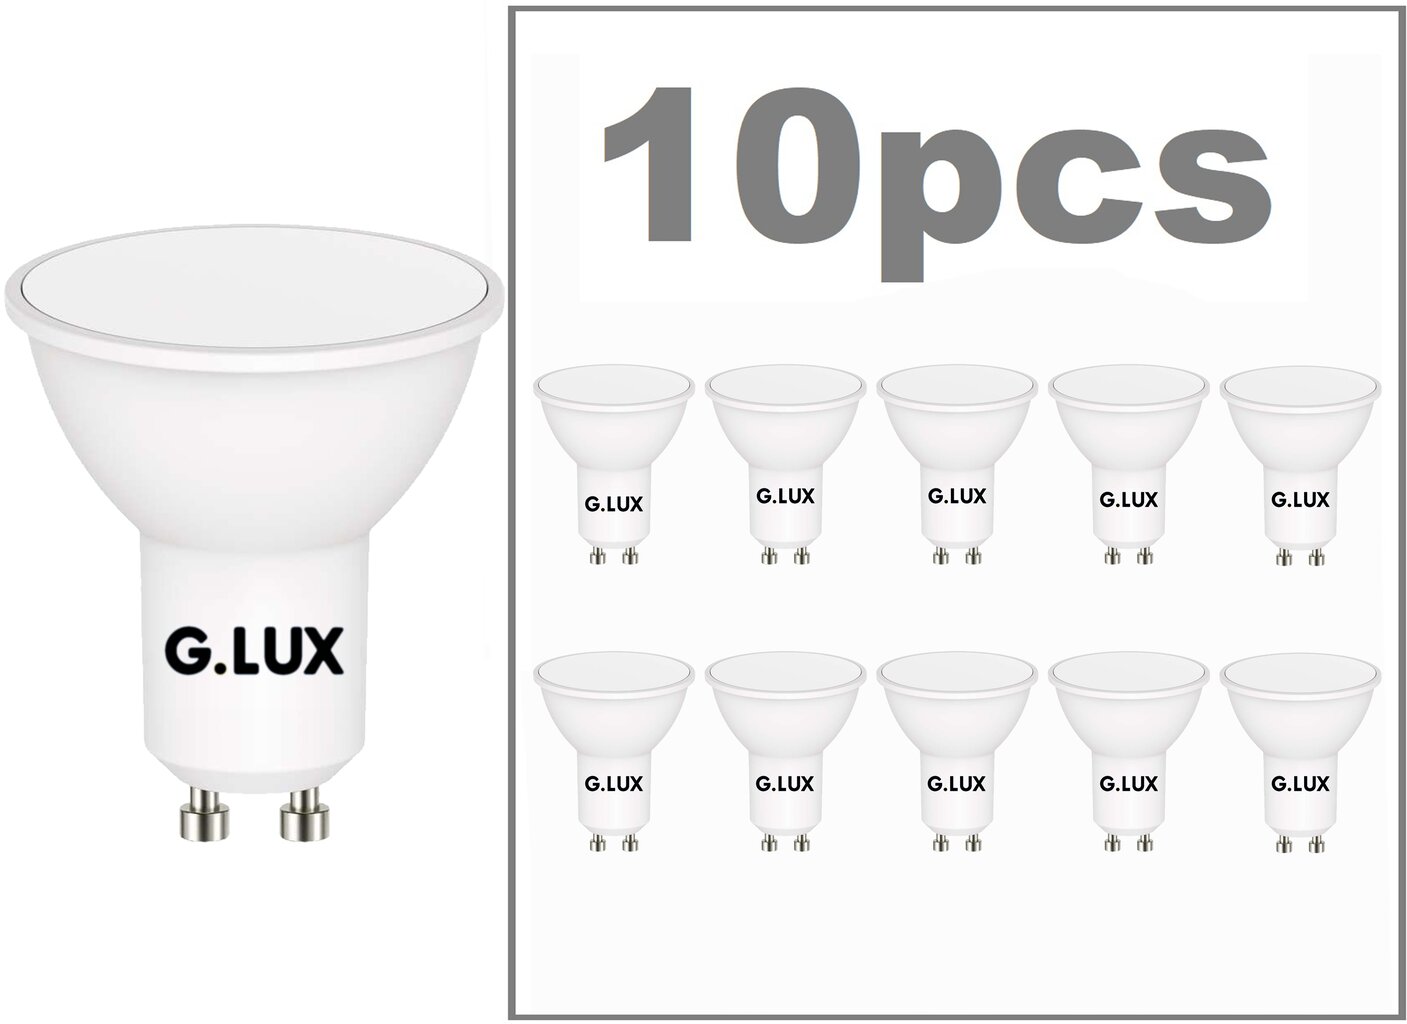 LED lemputės G.LUX GR-LED-GU10-PA9-8W 4000K kaina ir informacija | Elektros lemputės | pigu.lt